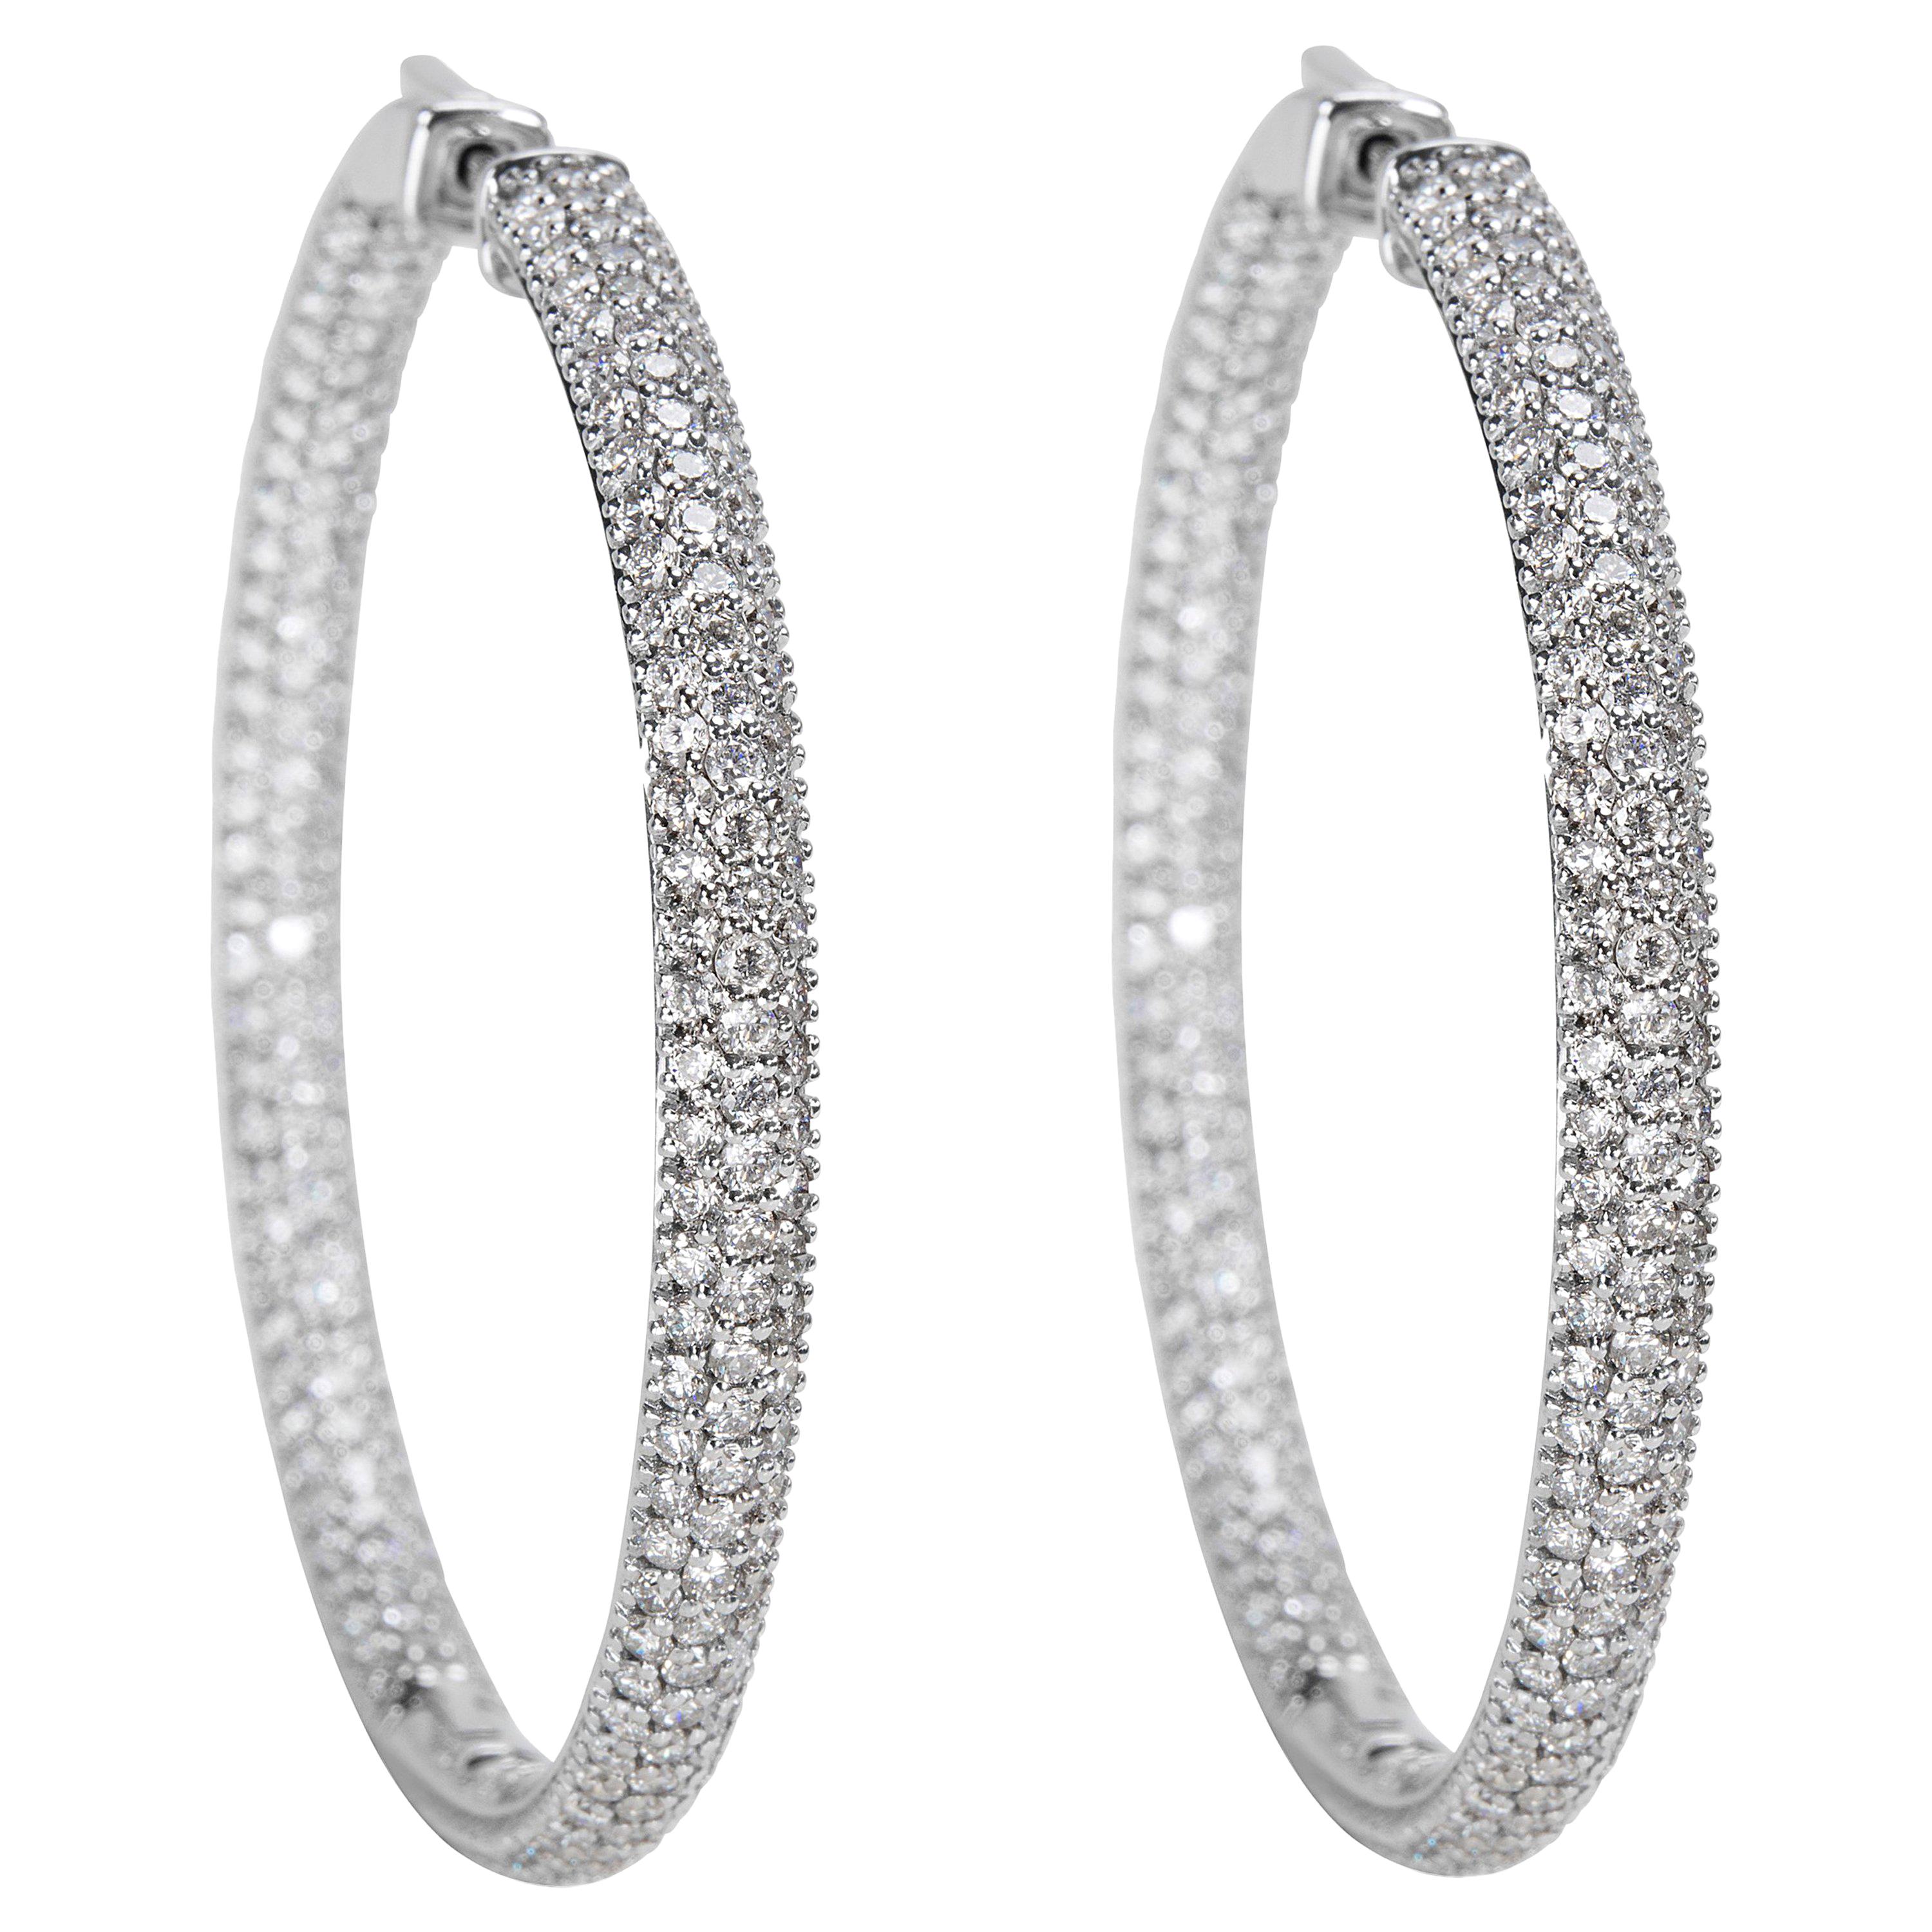 Pave Diamond Hoop Earrings in 14 Karat White Gold '6.68 Carat'